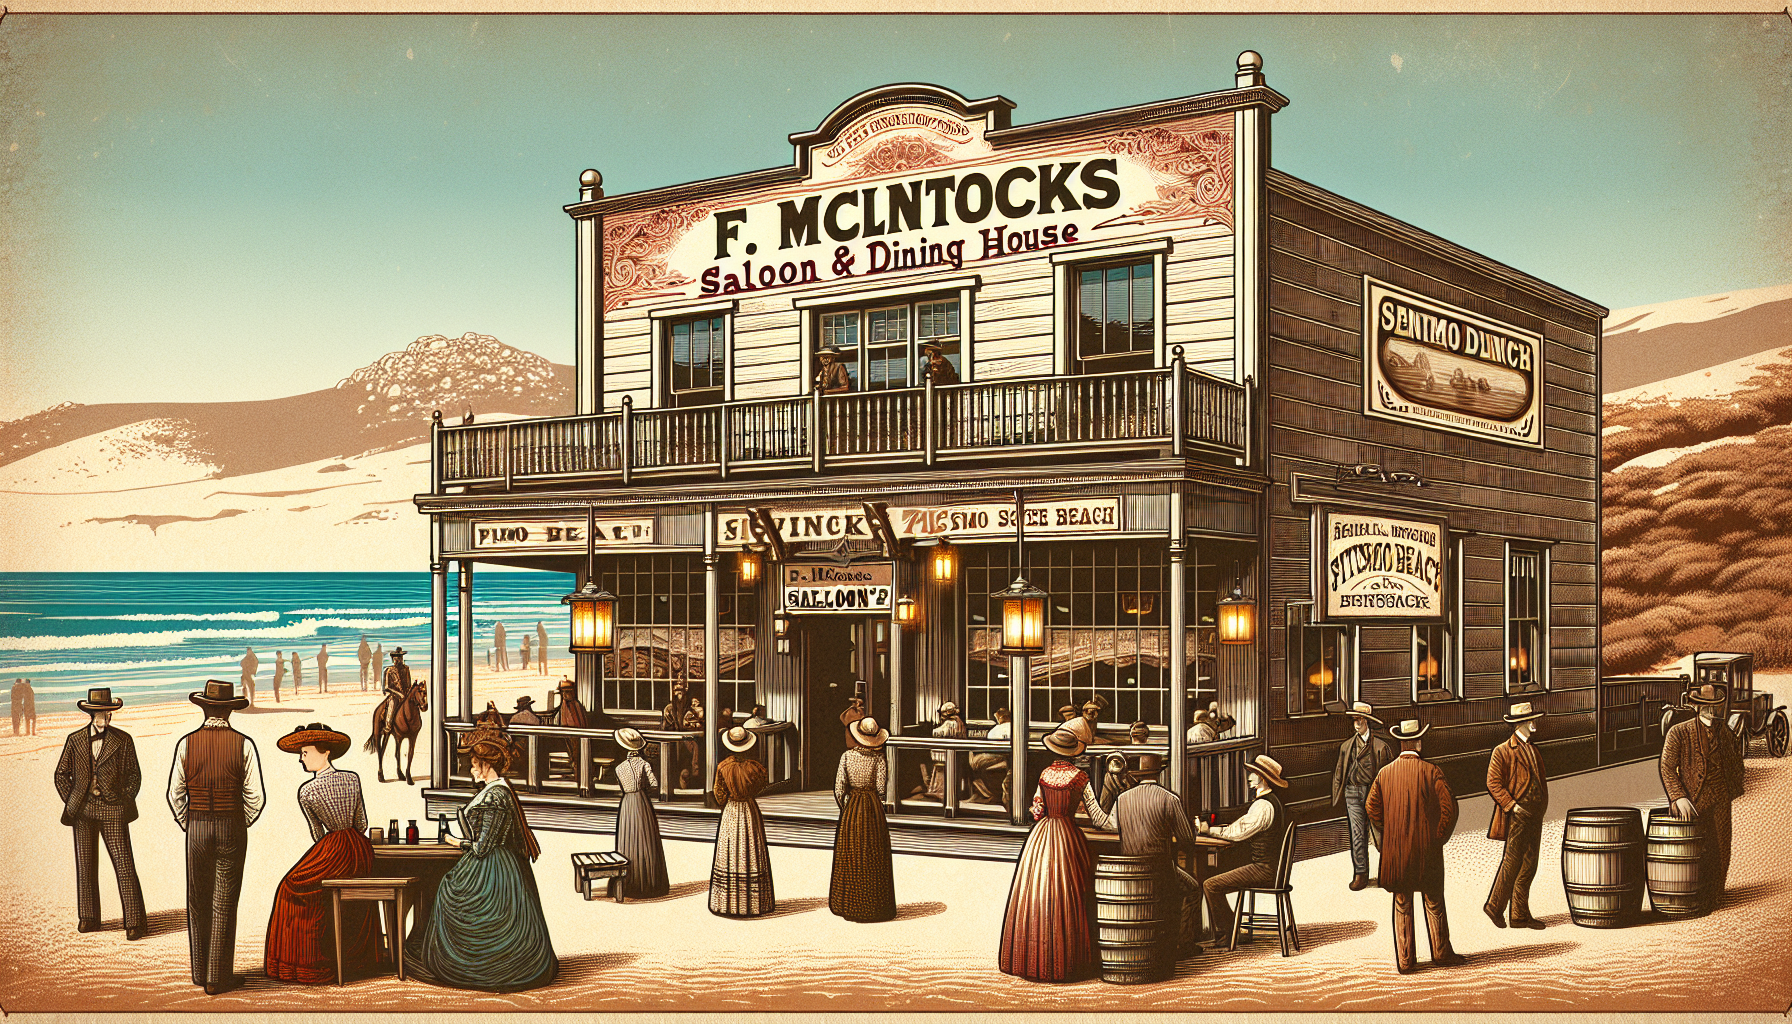 f. mclintocks saloon & dining house pismo beach reviews